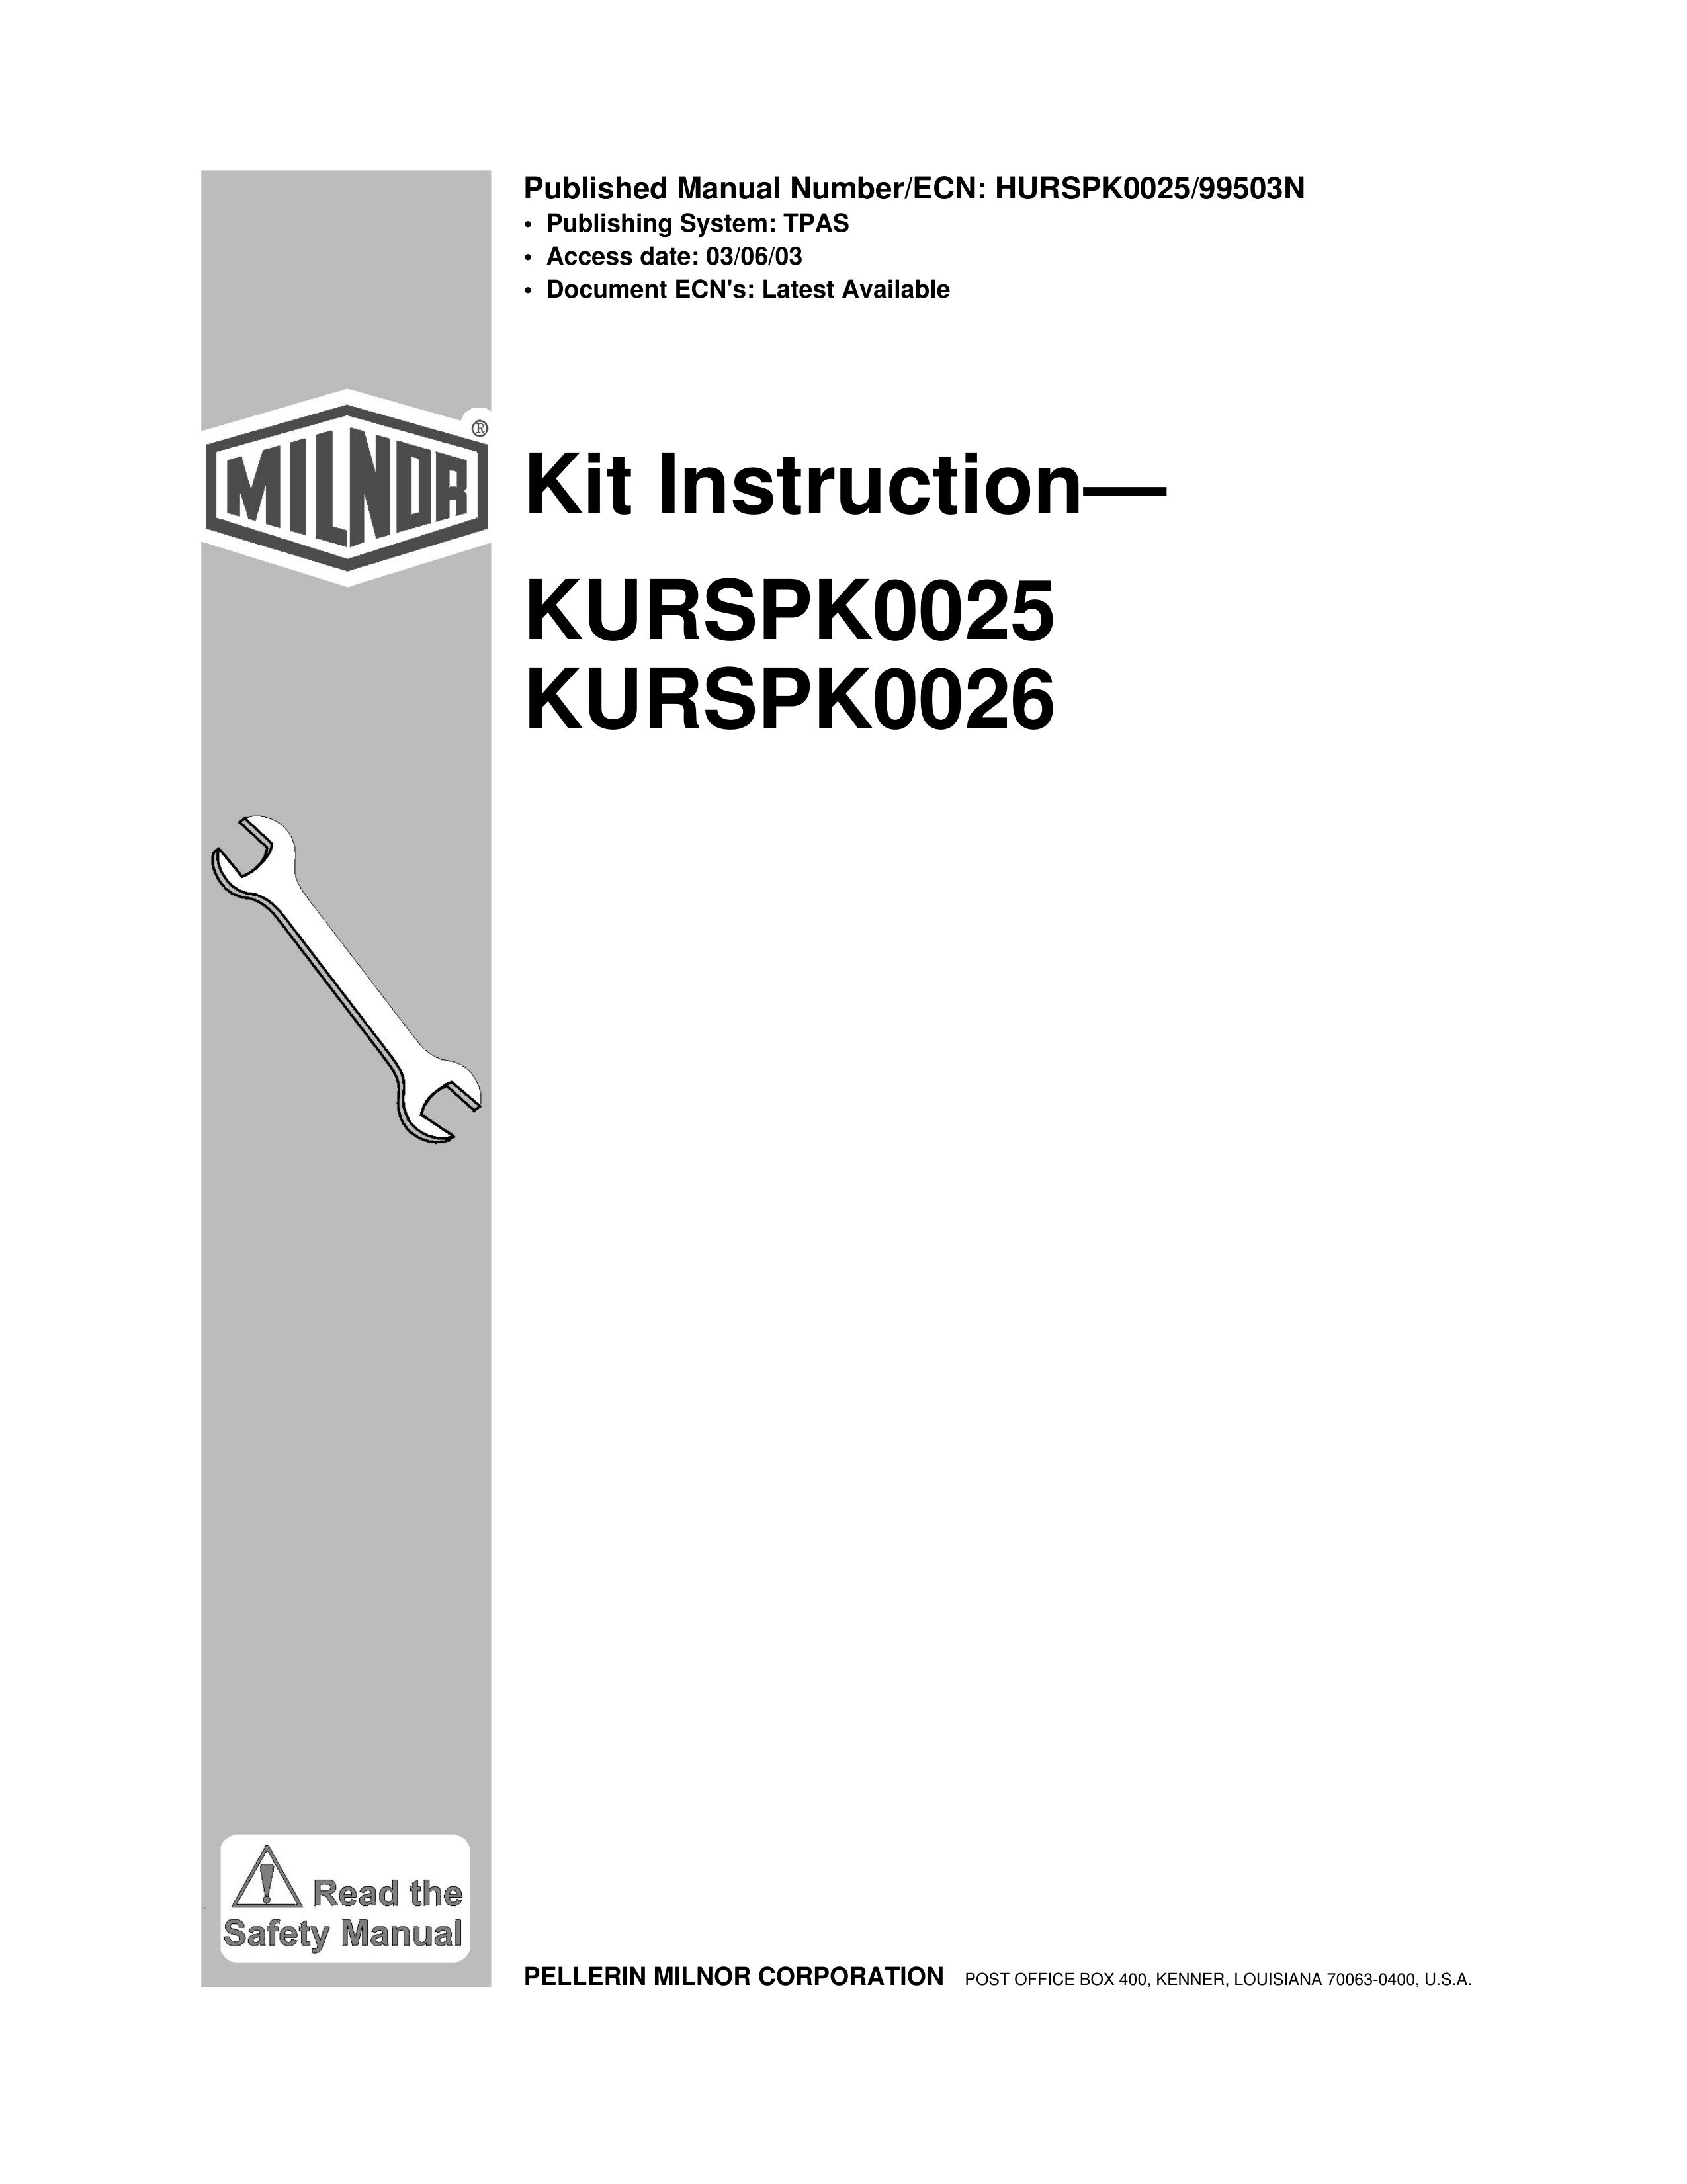 Milnor KURSPK0026 Clothes Dryer User Manual